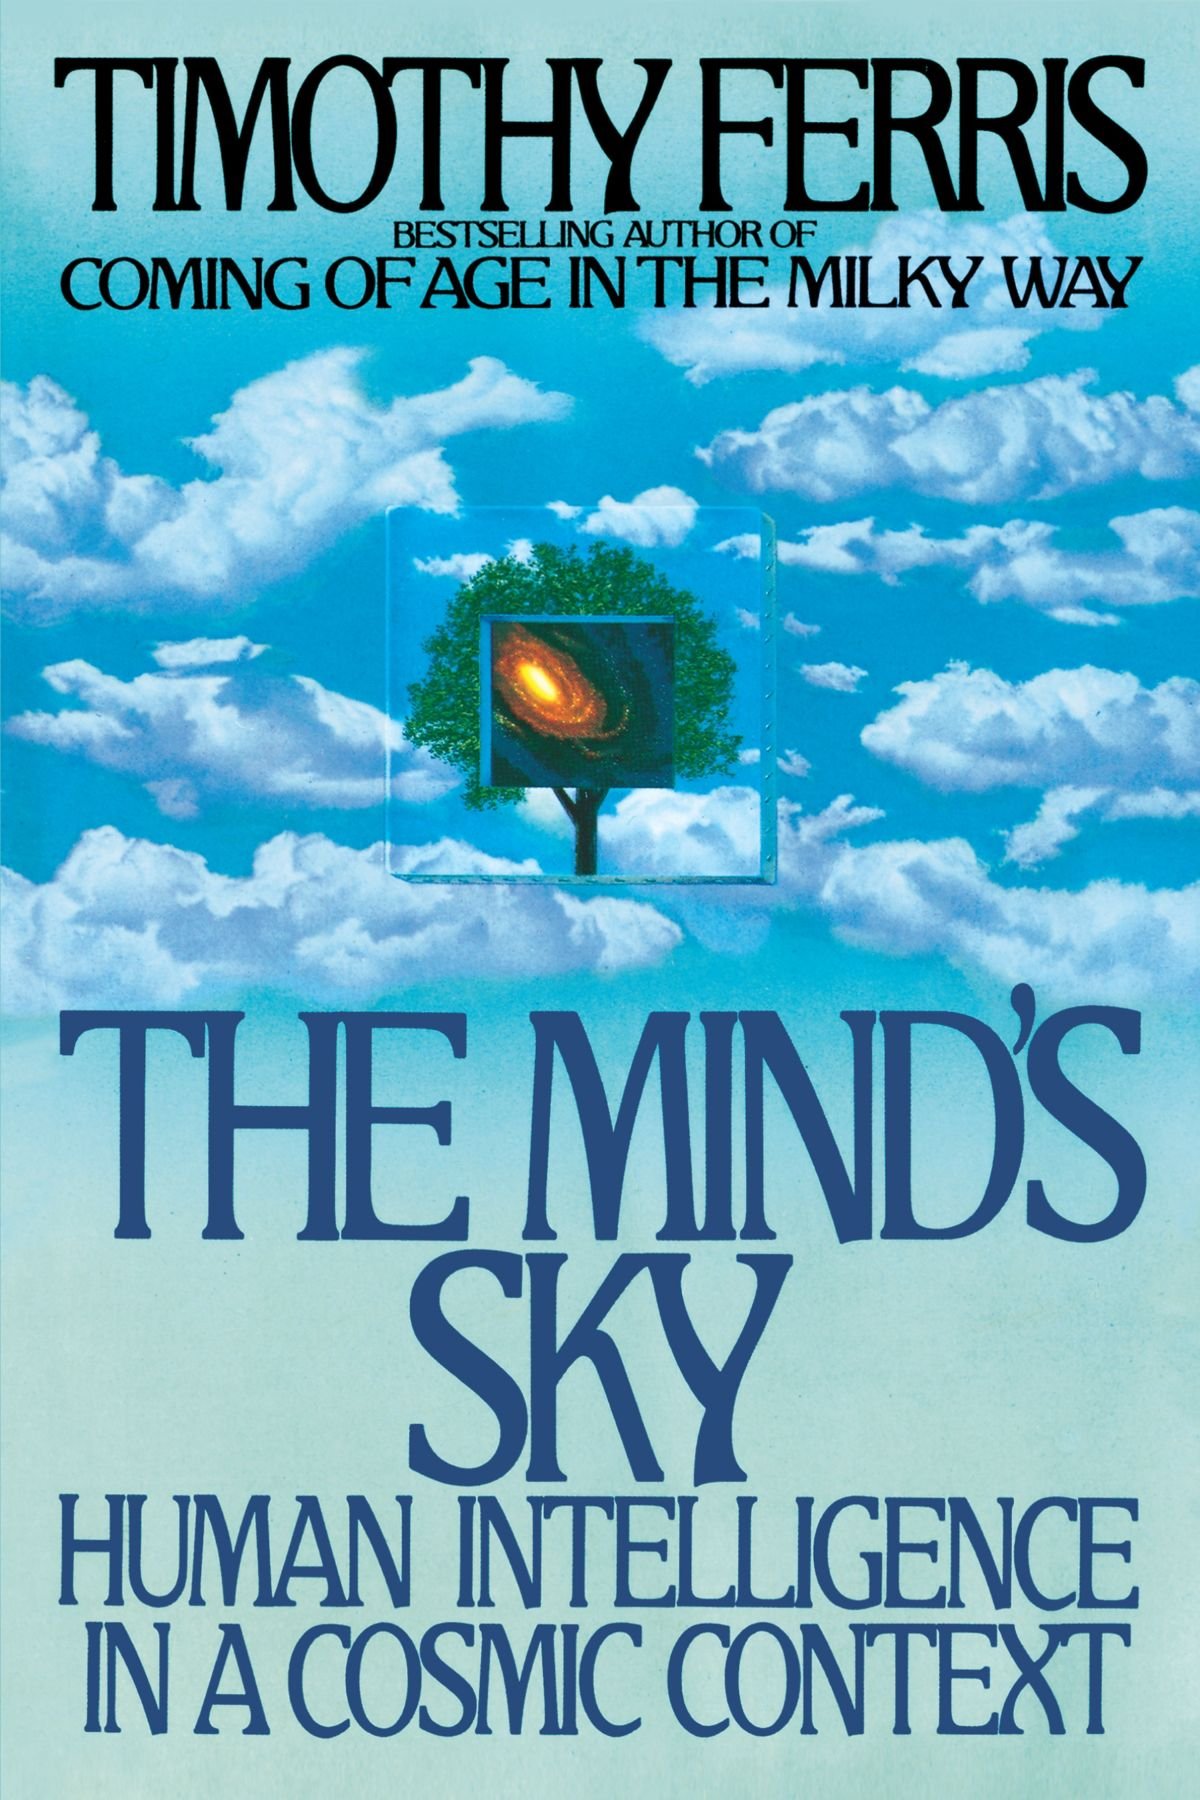 Timothy Ferris: The Mind's Sky (1993, Bantam)